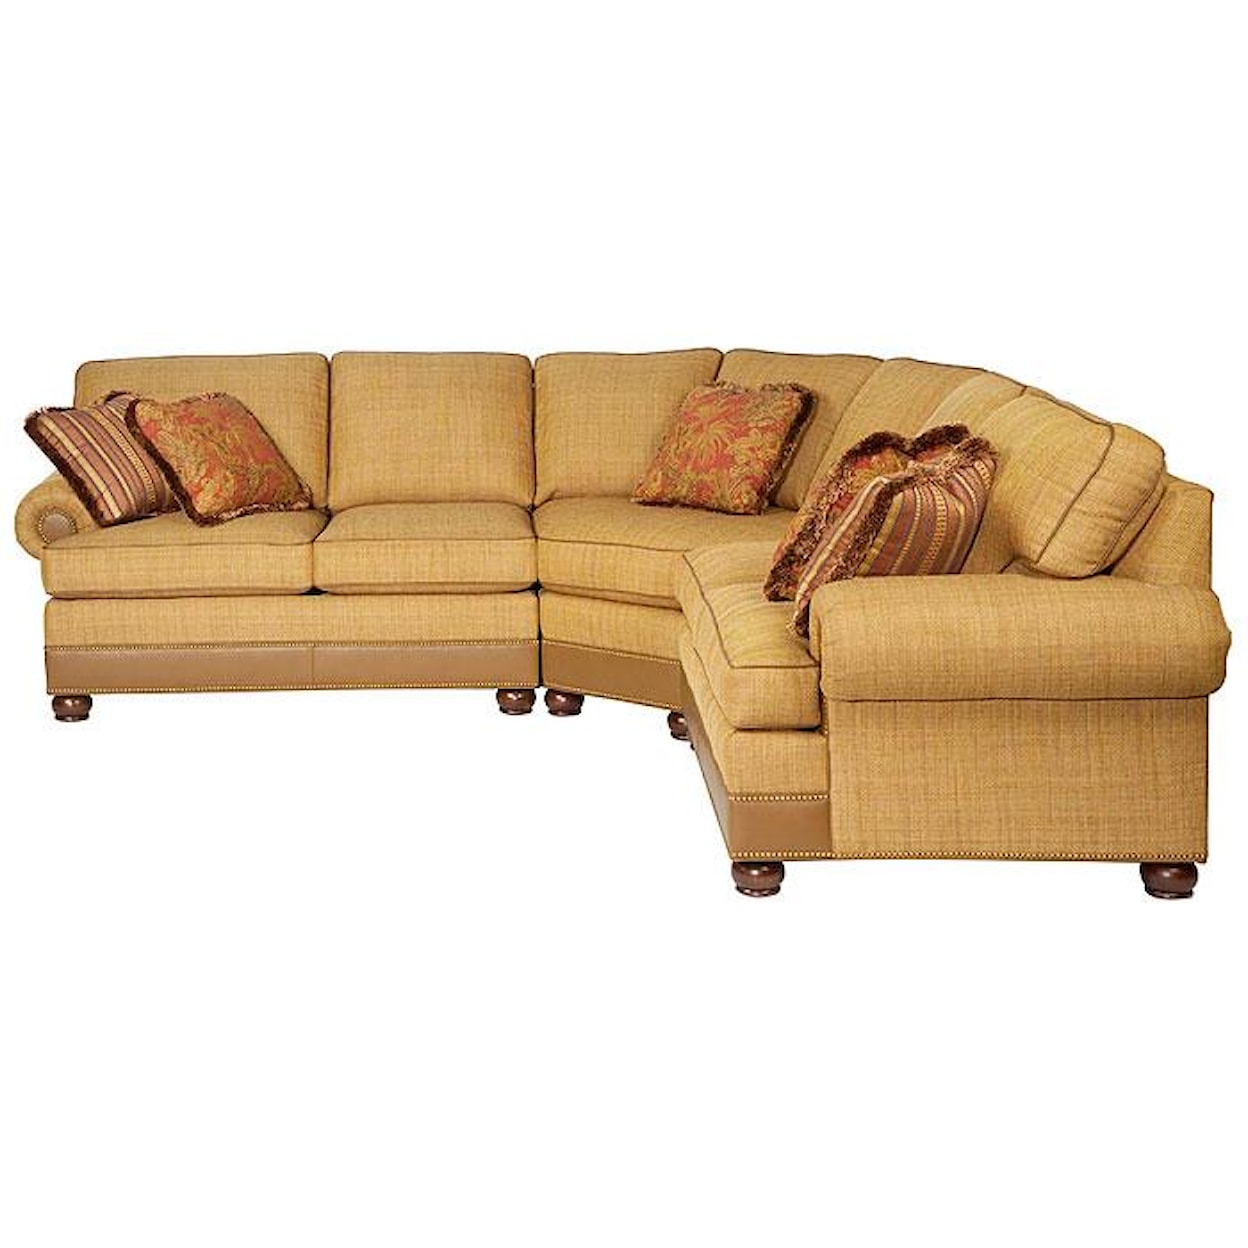 Taylor King Casual Corners Customizable Sectional Sofa